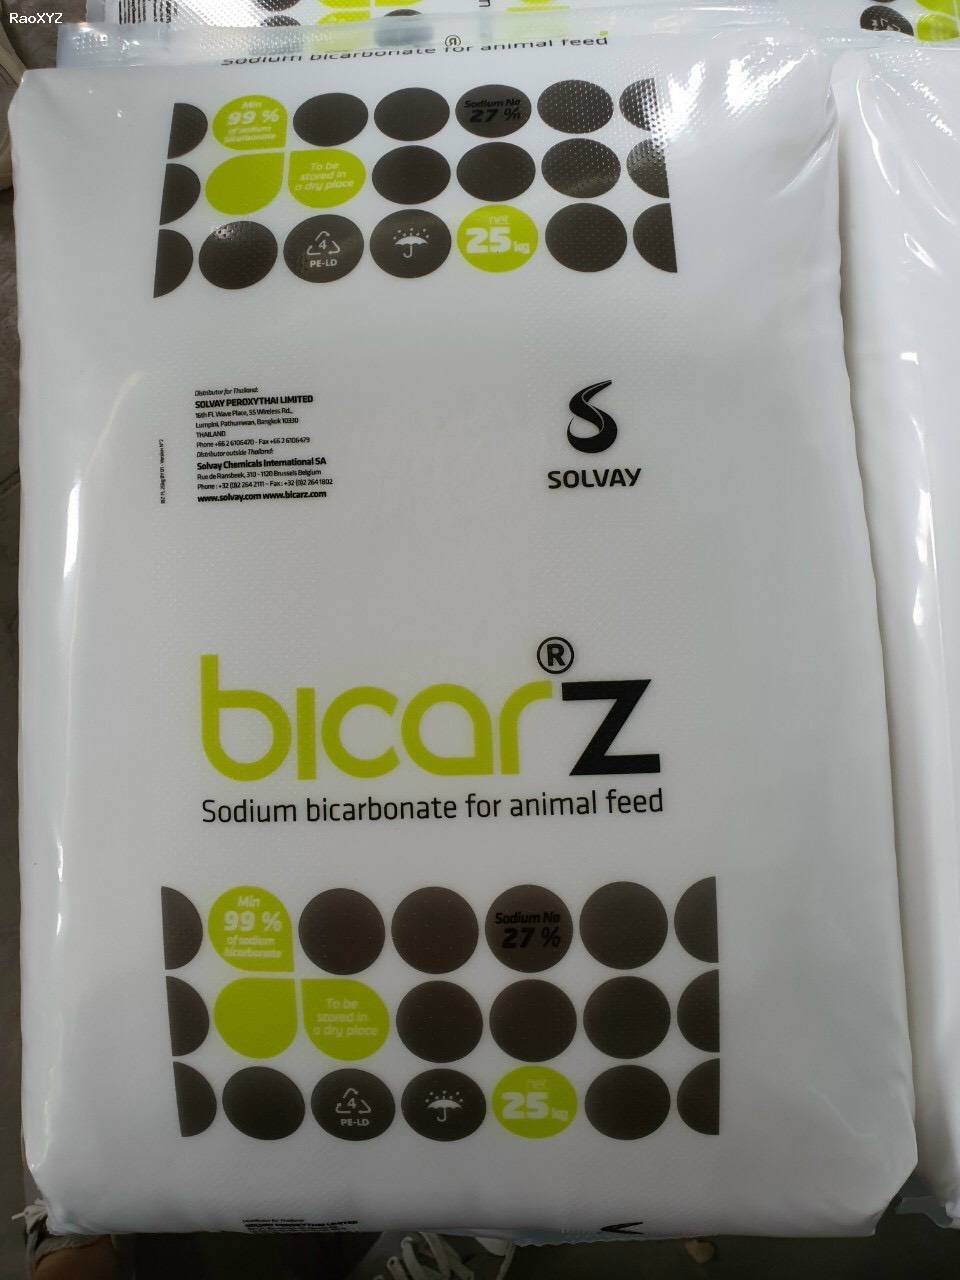 Sodium Bicarbonate bao xanh - Sodium Bicar Z - NaHCO3 - Thuốc tiêu mặn